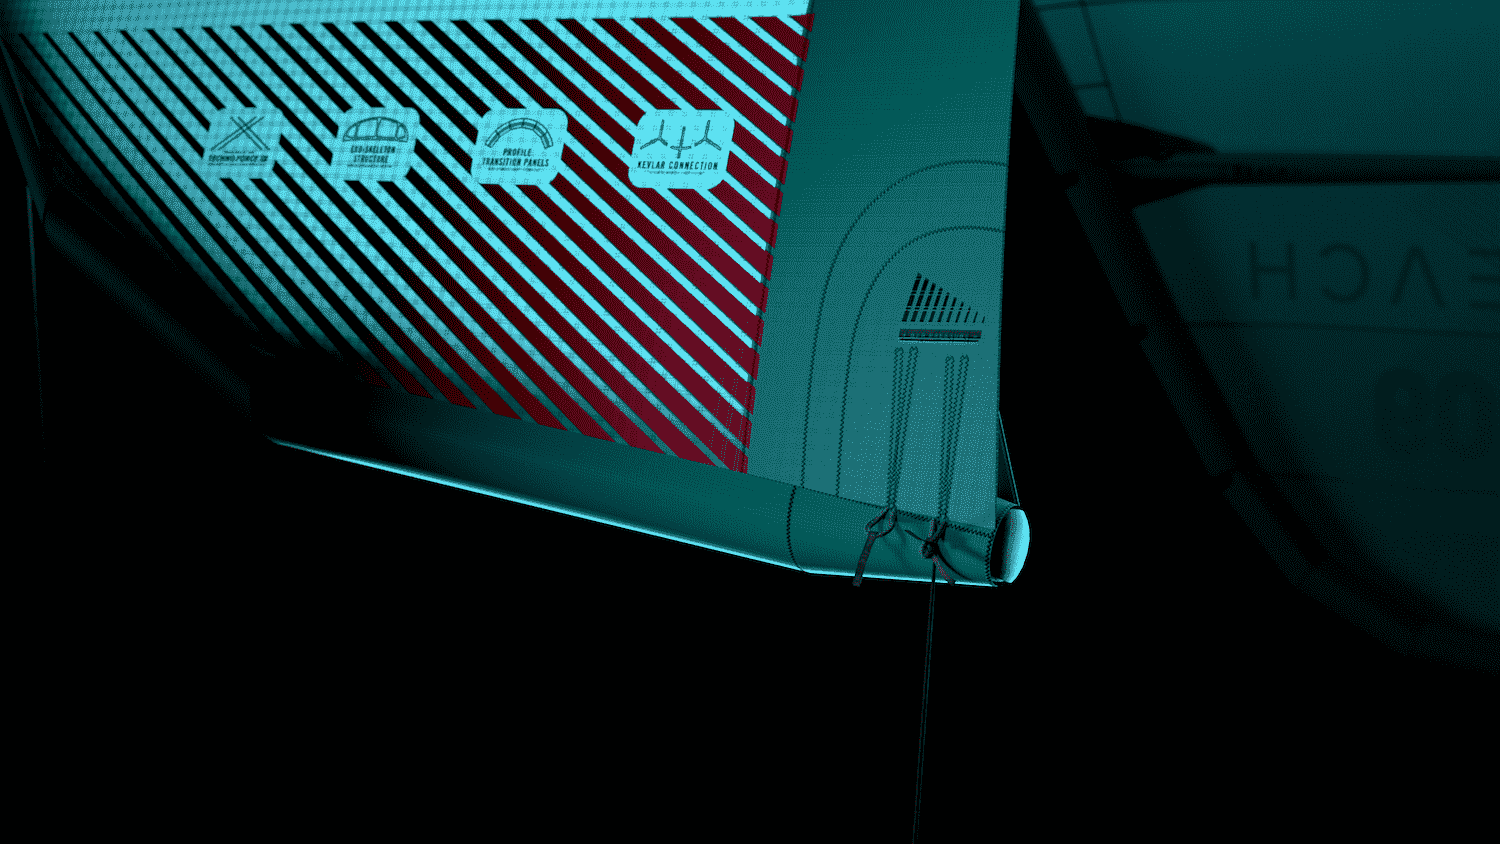 NORTH Reach Kite, 2022 Performance Freeride/Alrounder, Kite + Bar (optional)